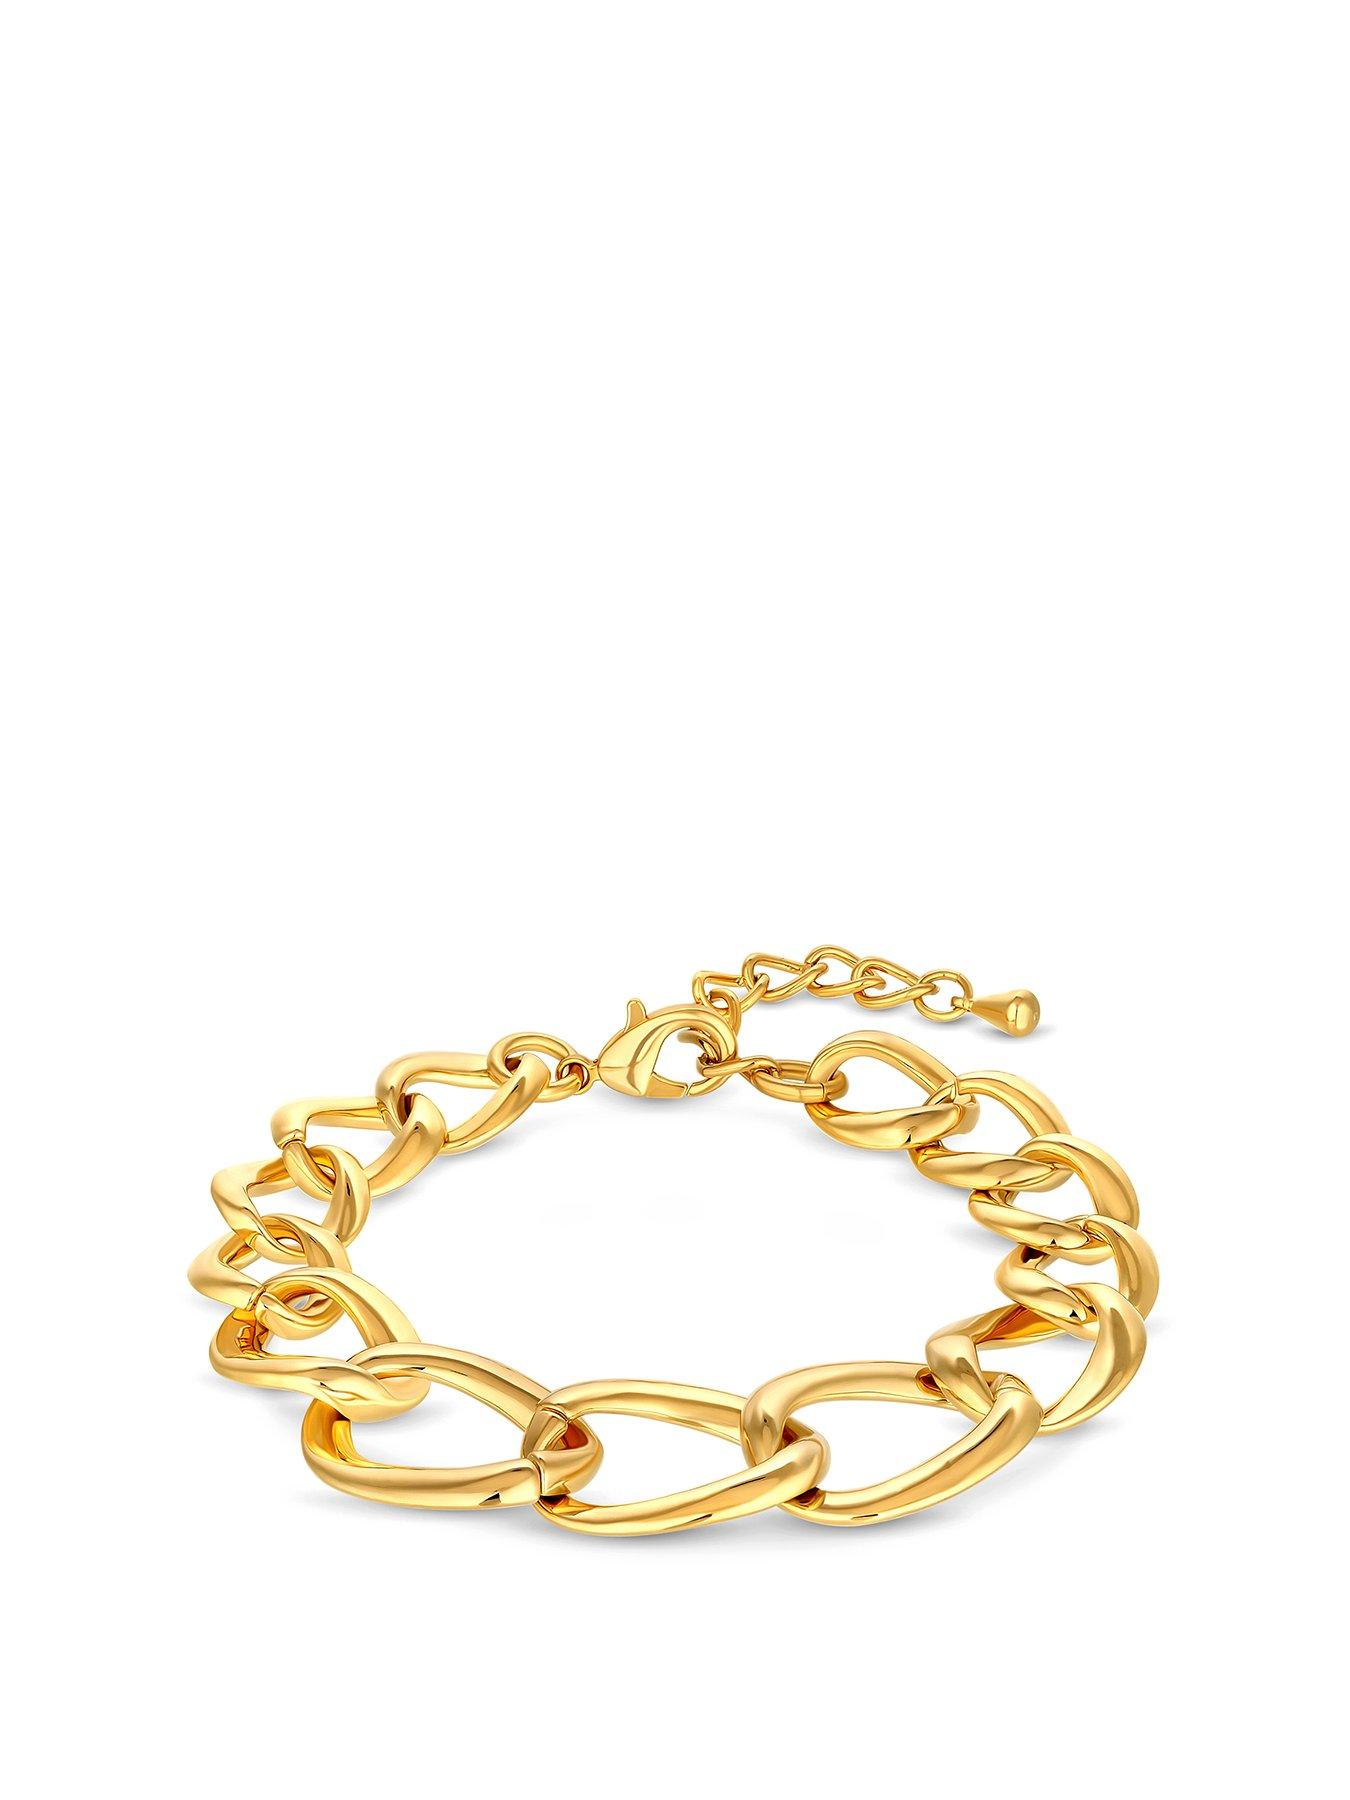  Reversible Thin Gold Line Bracelet Wristband